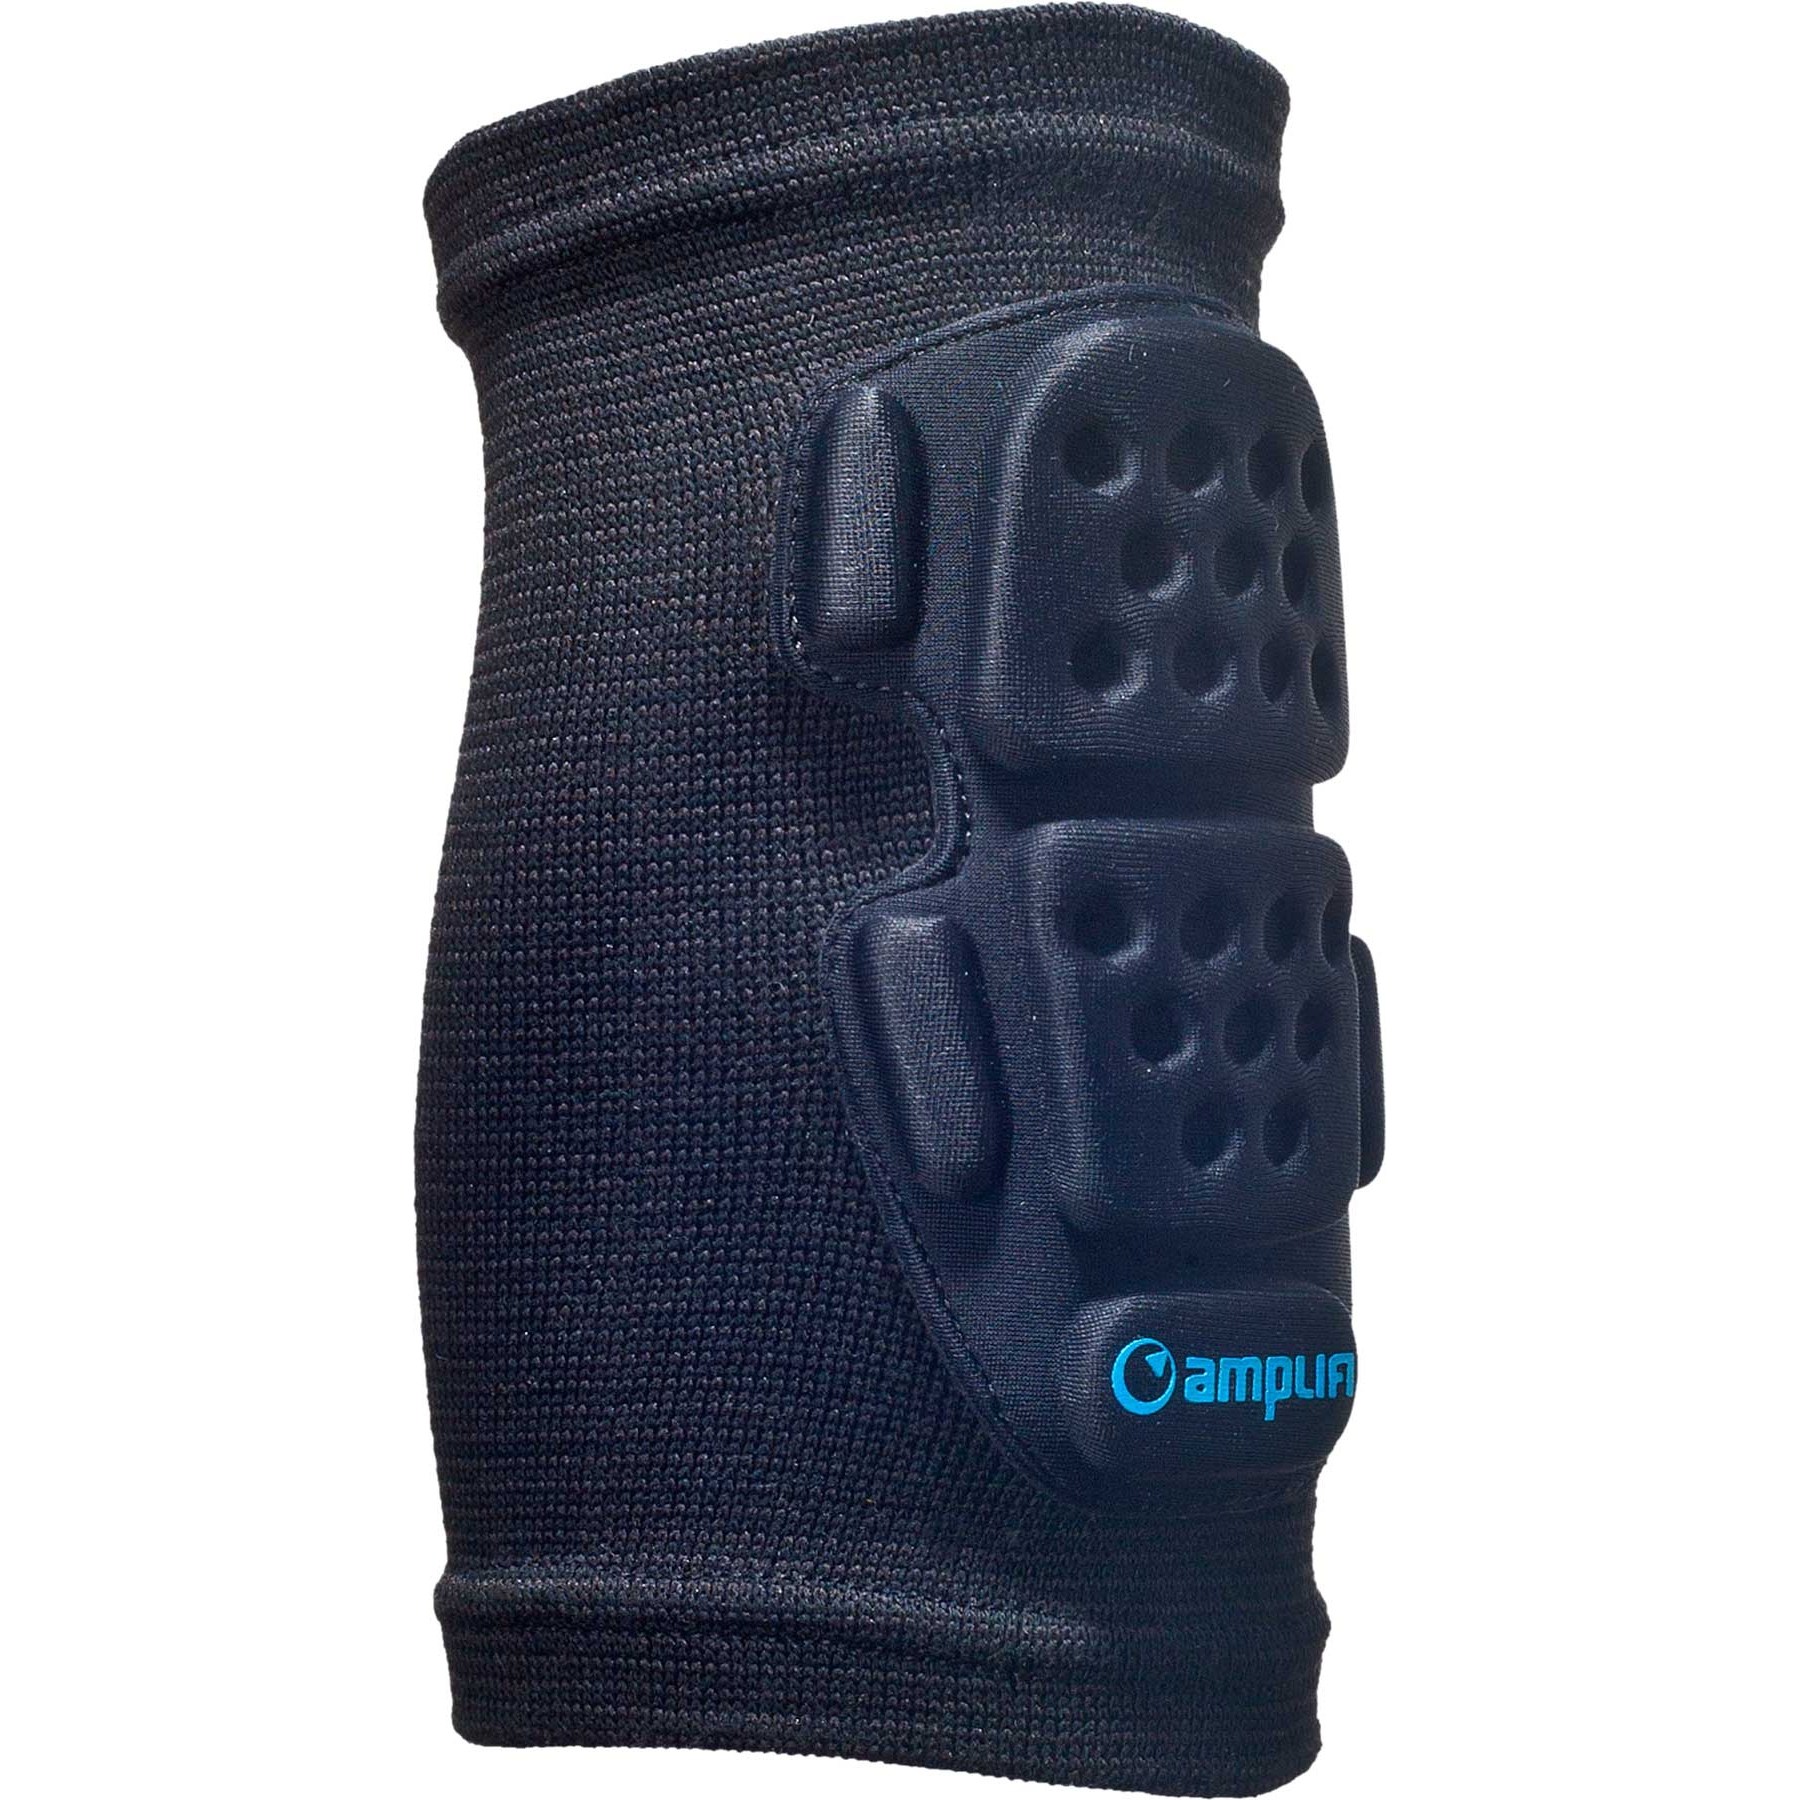 Productfoto van Amplifi Elbow Sleeve Grom - Elleboogbeschermer voor Kinder - black